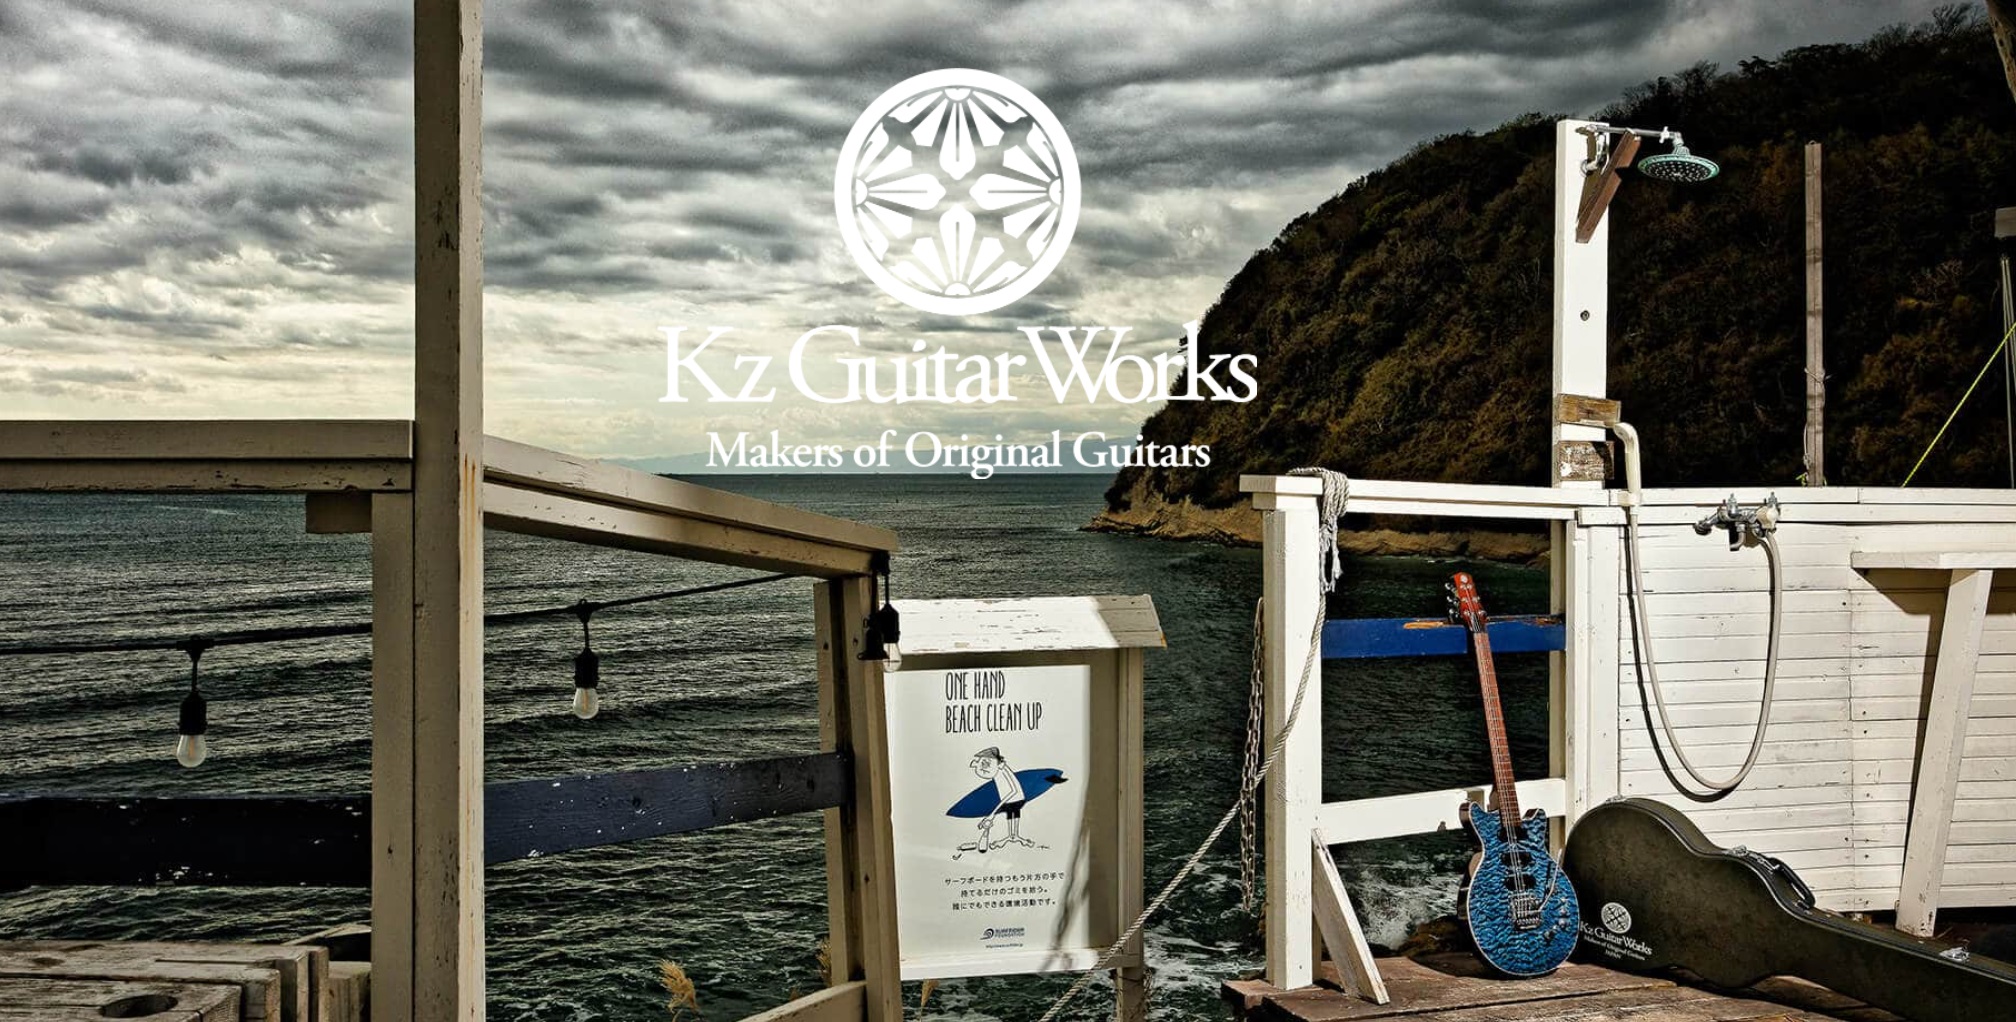 Hand Made Guitar Fair 立川店では、2022/6/25～7/3に国産ブランドを中心としたギター/ベース/エフェクターのフェアを開催します。 Kz Guitar Works Special Talk Show 7/2（土）にKz Guitar Worksの代表である伊集院氏をお招き […]